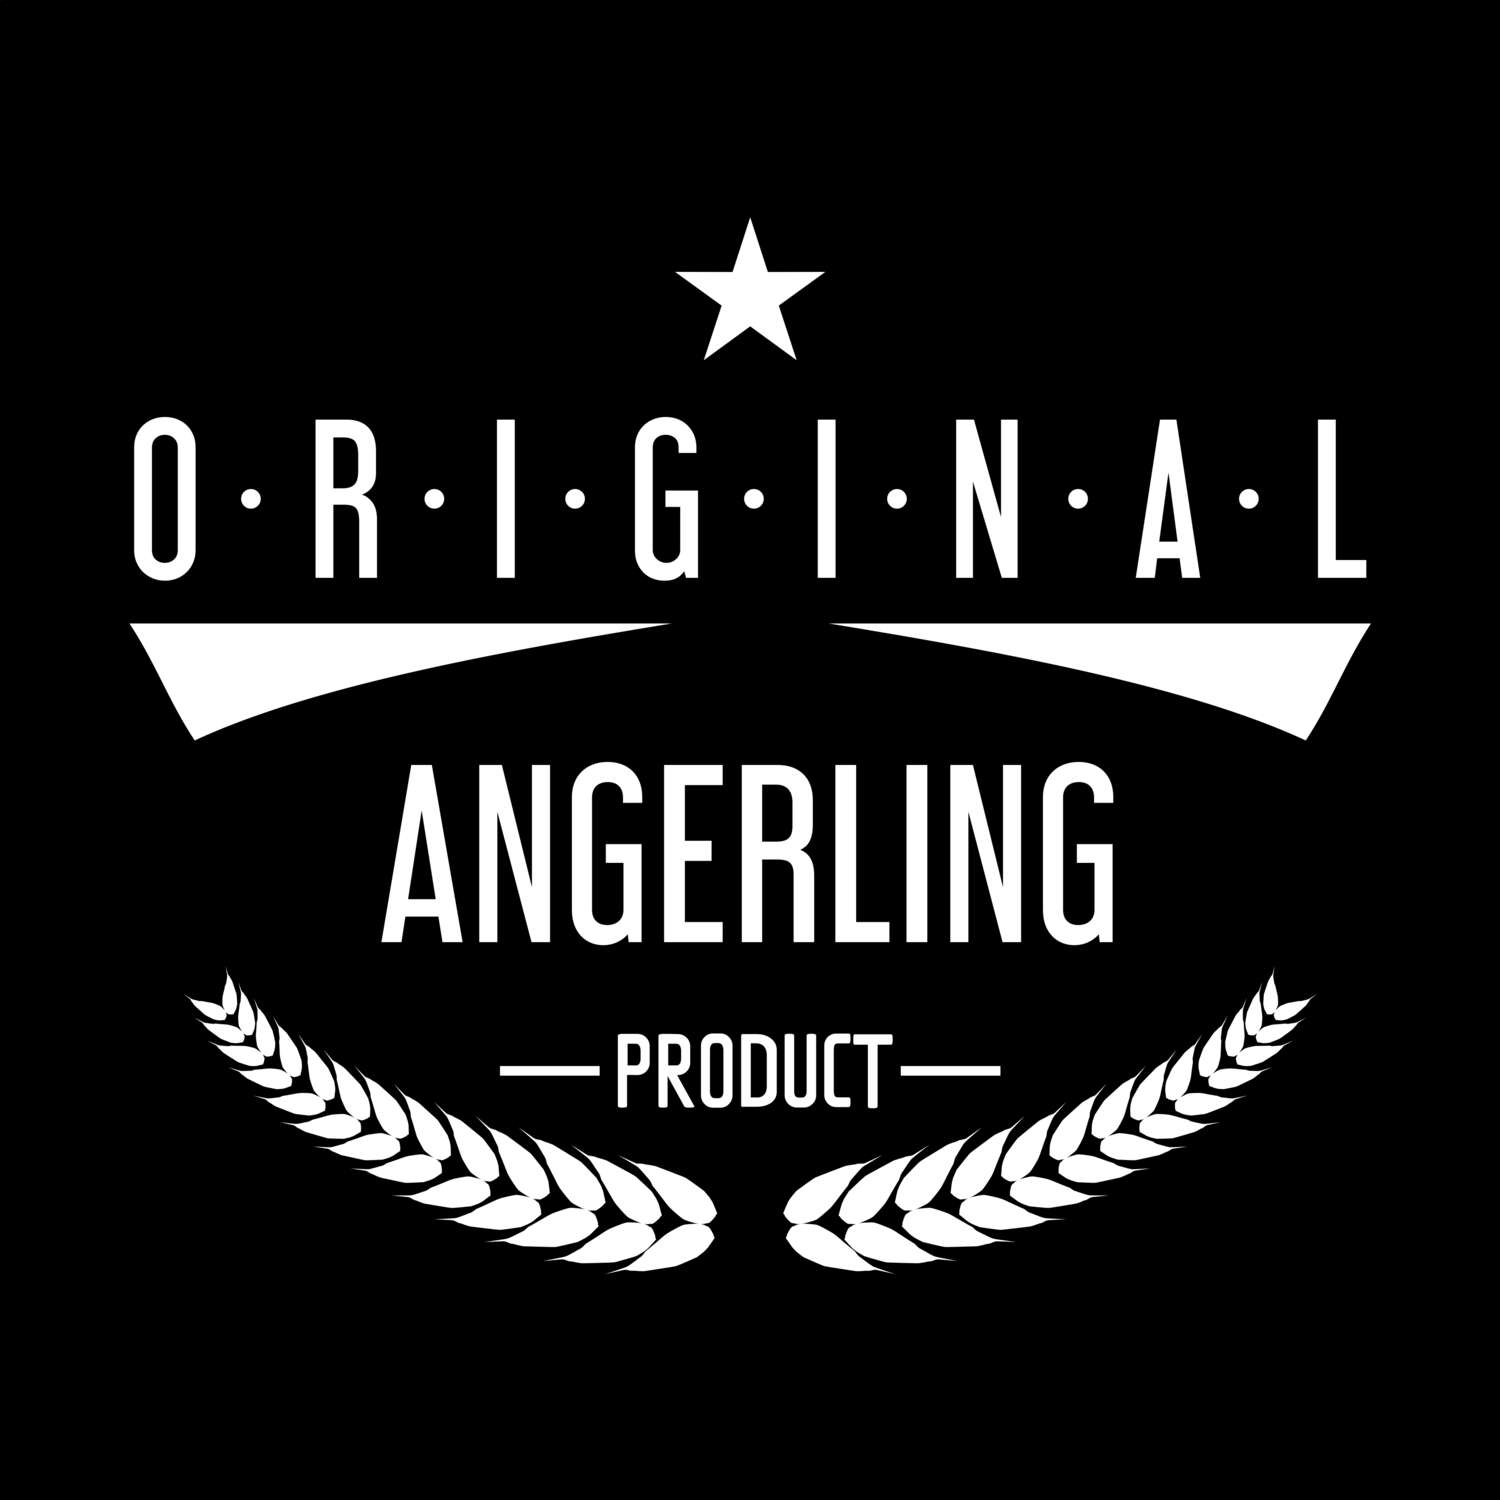 Angerling T-Shirt »Original Product«